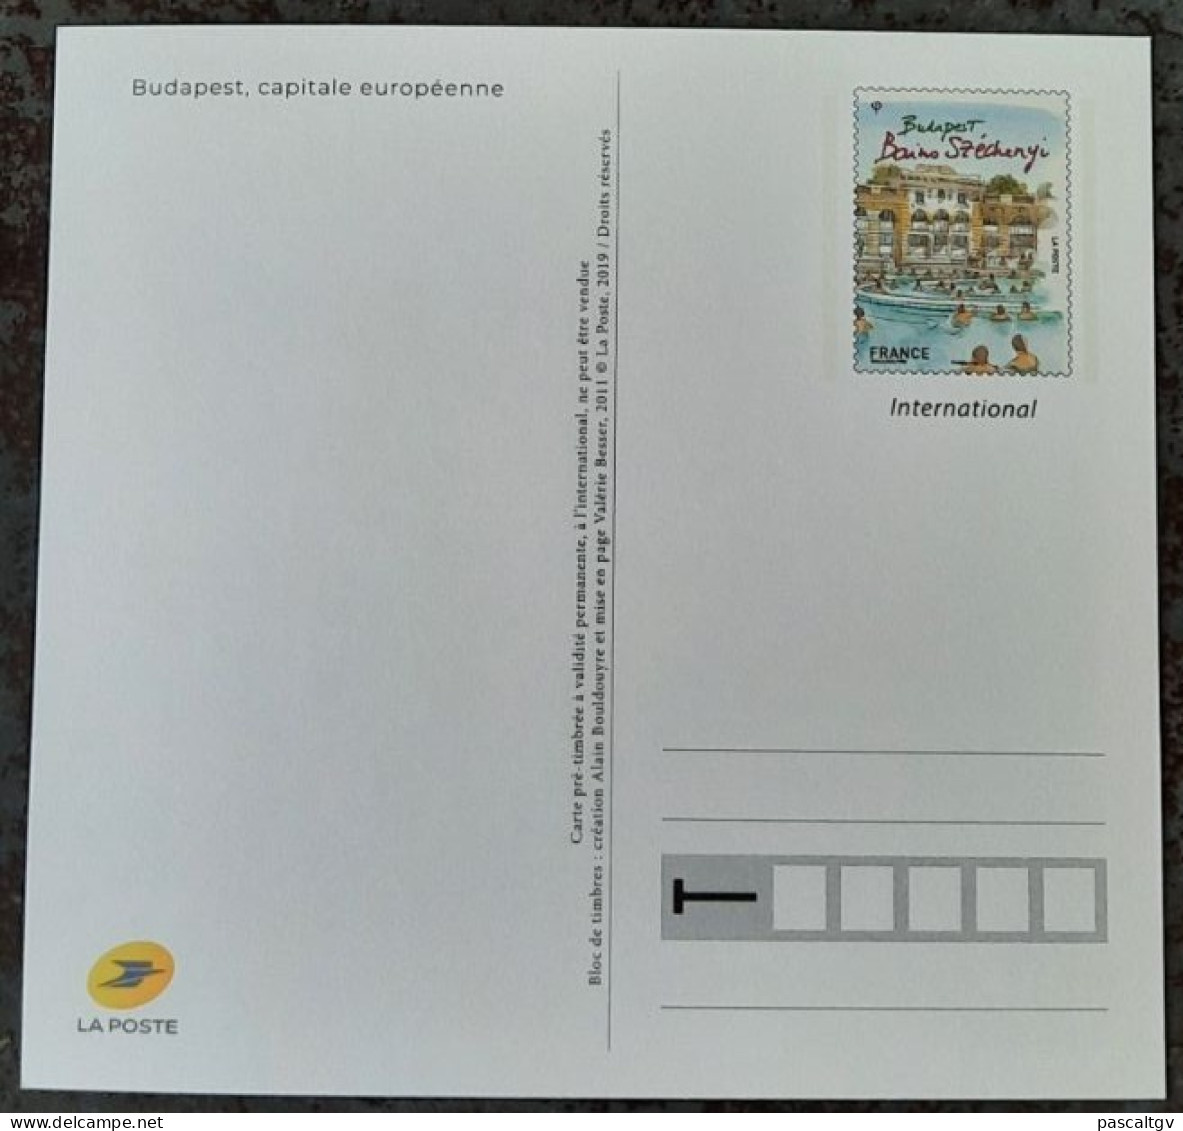 2011 - Entier Postal International - 20gr (1,96 Euro) - ** BUDAPEST Capitale Européenne ** - 4538 - LUXE - - Documents De La Poste